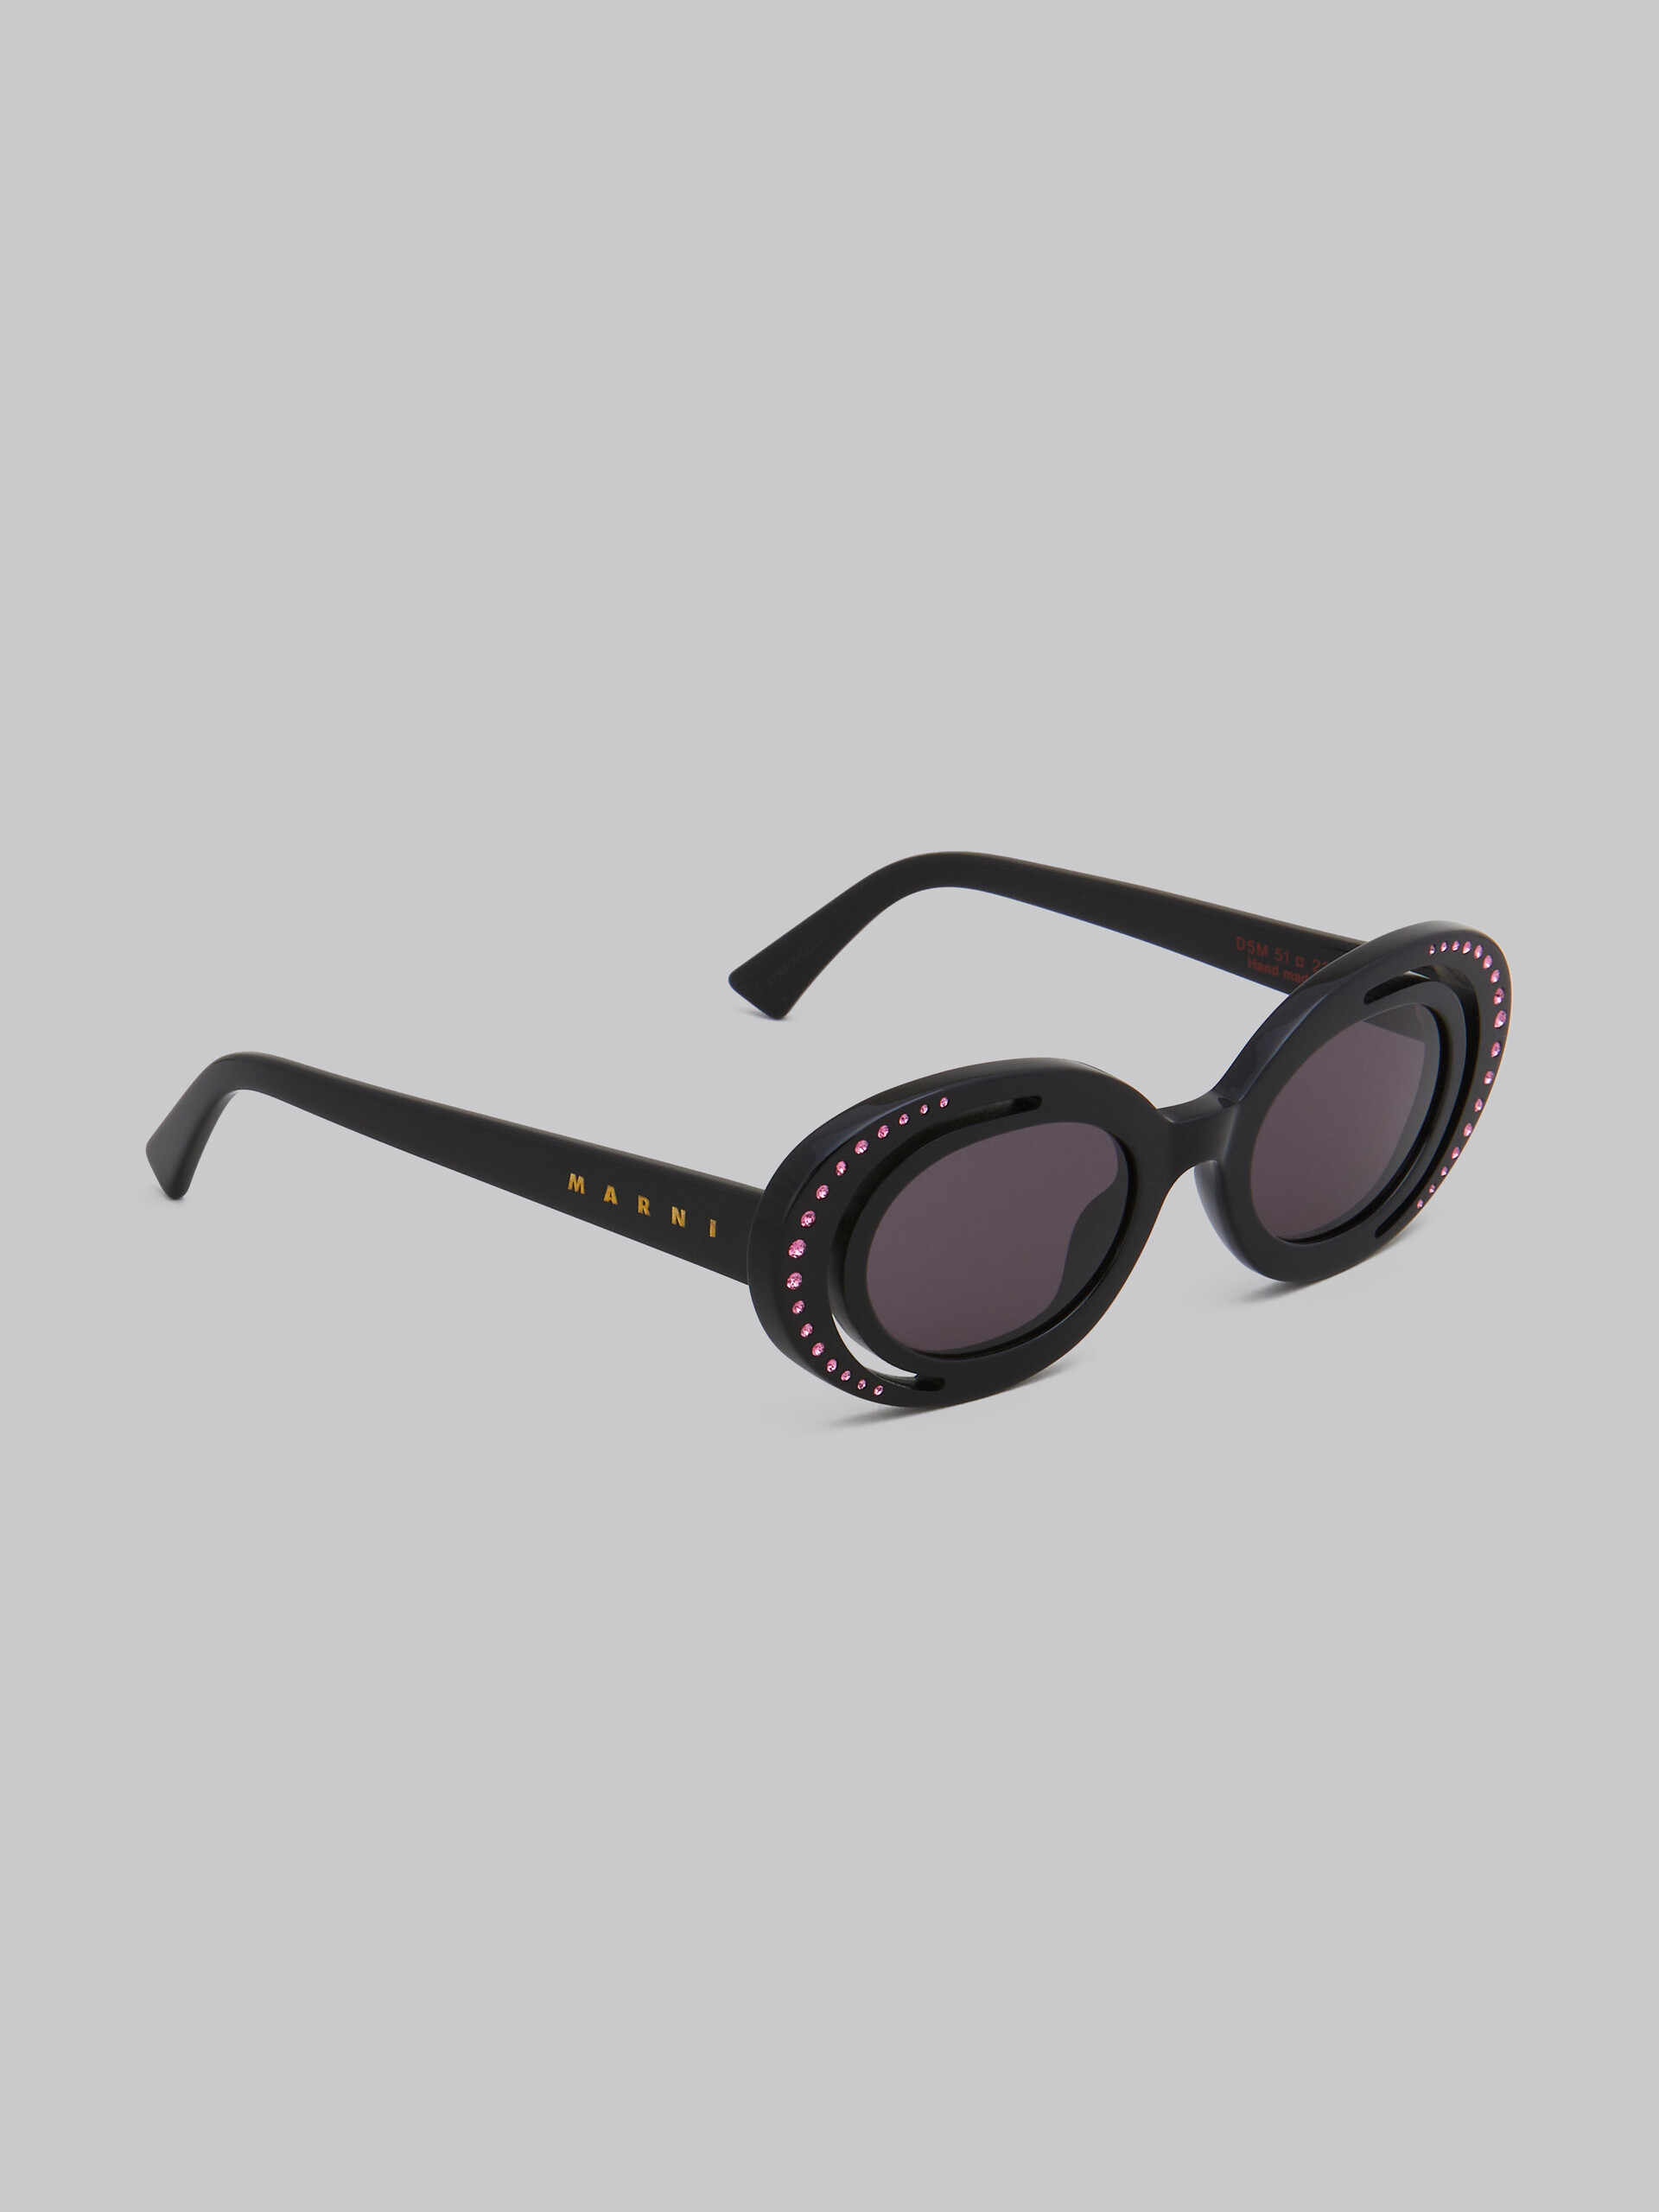 Zion Canyon black sunglasses - Optical - Image 3